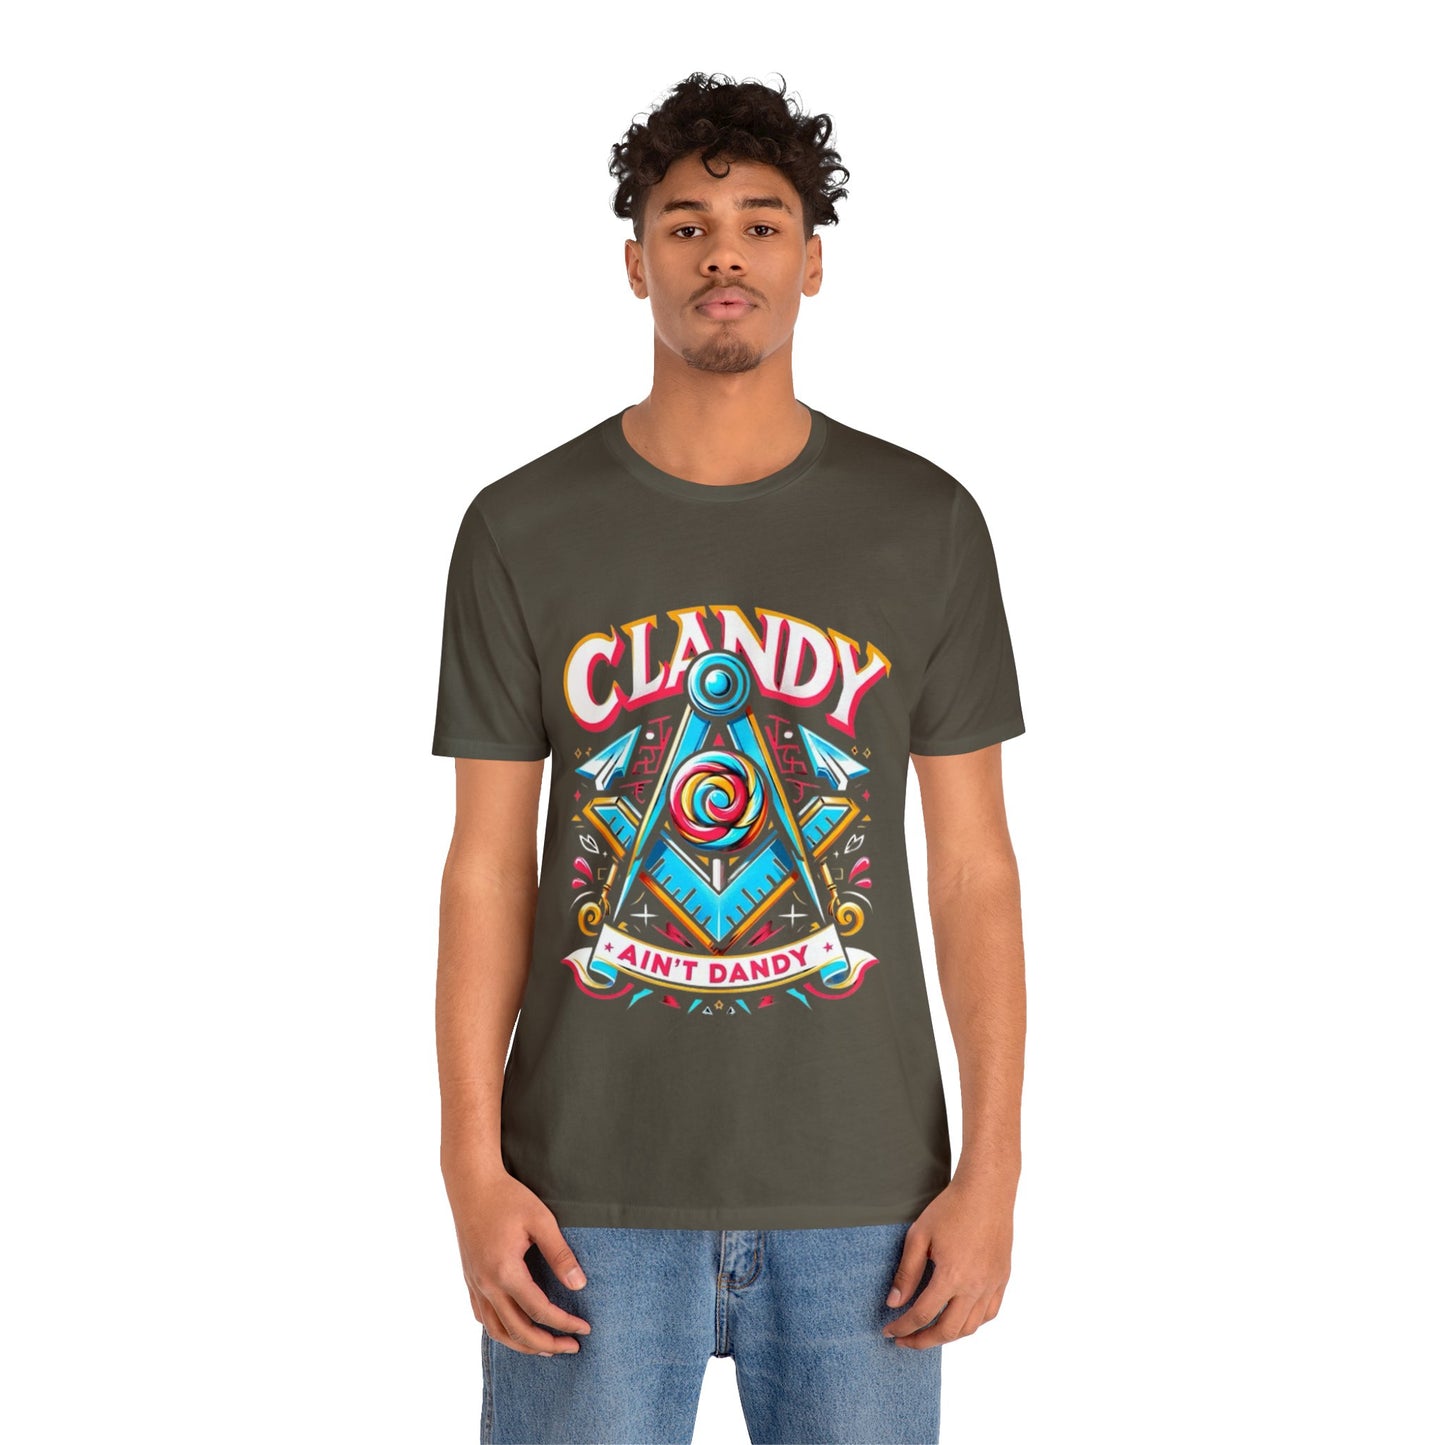 Clandy Candy Short Sleeve Tee